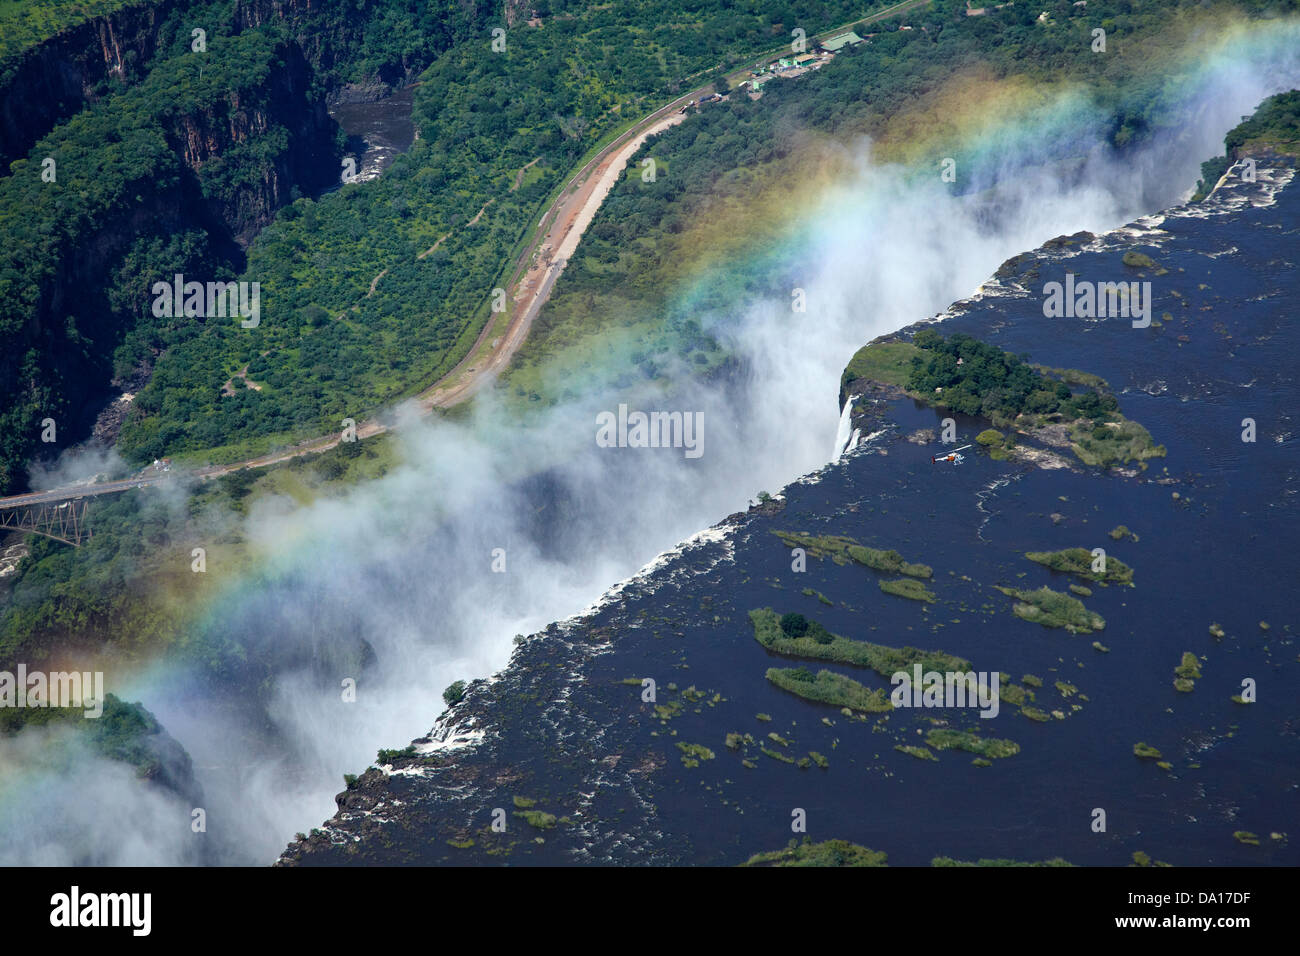 Helicopter, rainbow and spray, Victoria Falls or 'Mosi-oa-Tunya' (The Smoke that Thunders), and Zambezi River, Zimbabwe / Zambia Stock Photo